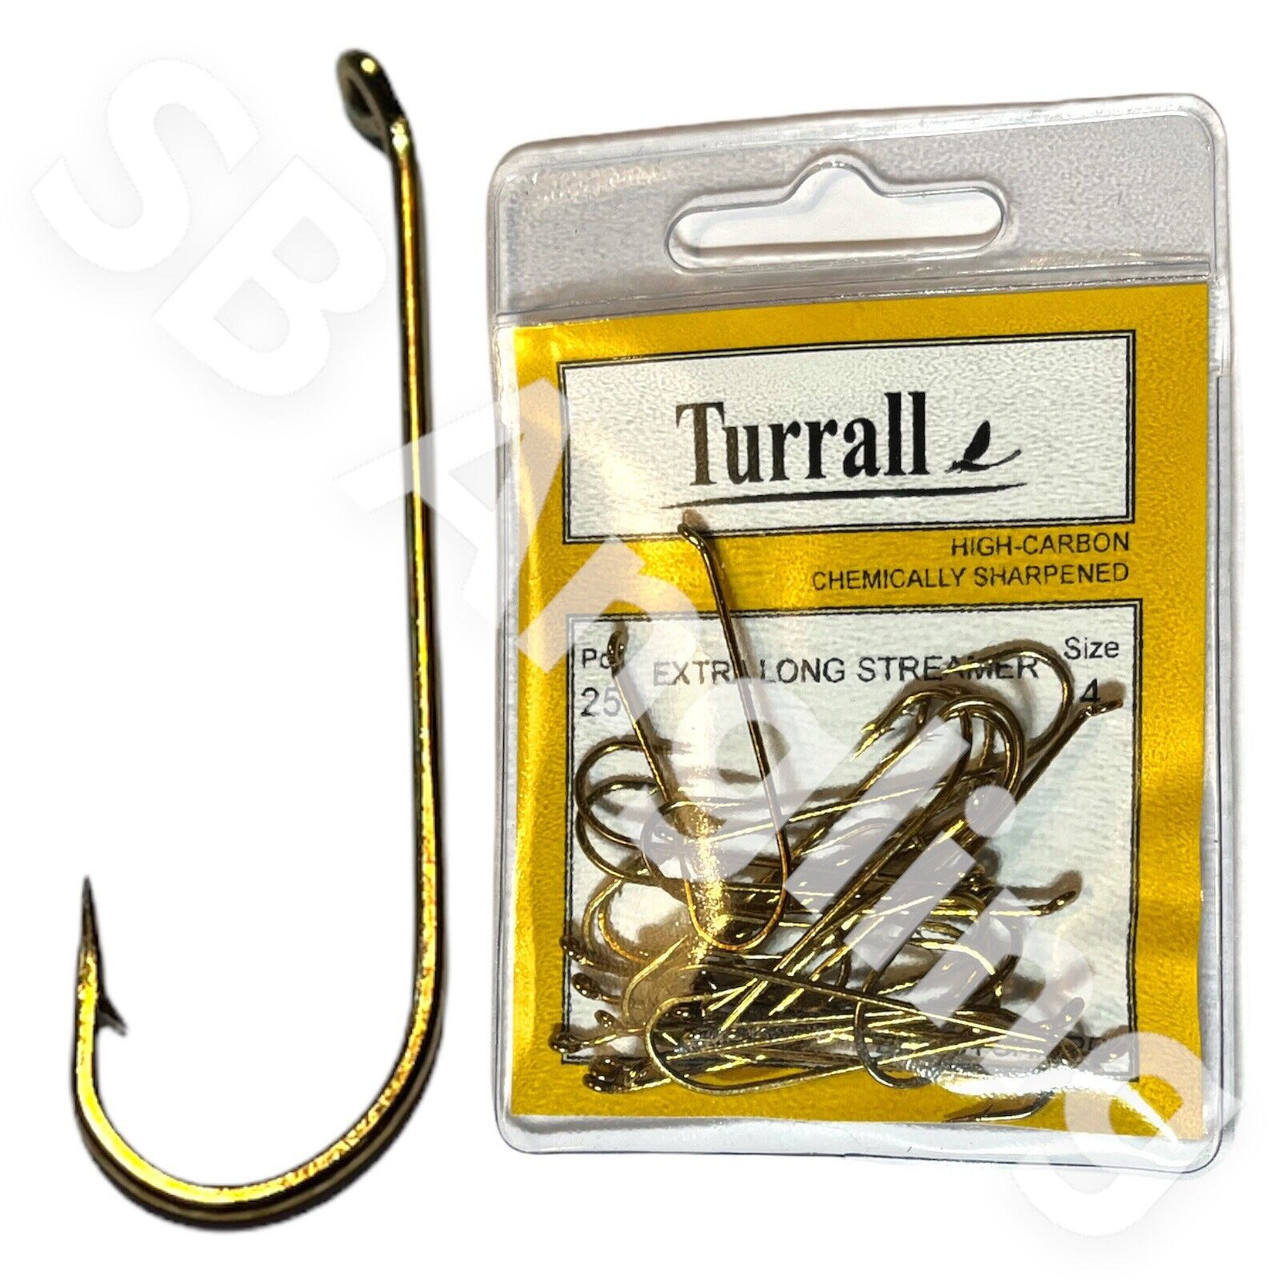 Turrall Extra Long Streamer Fly Hooks